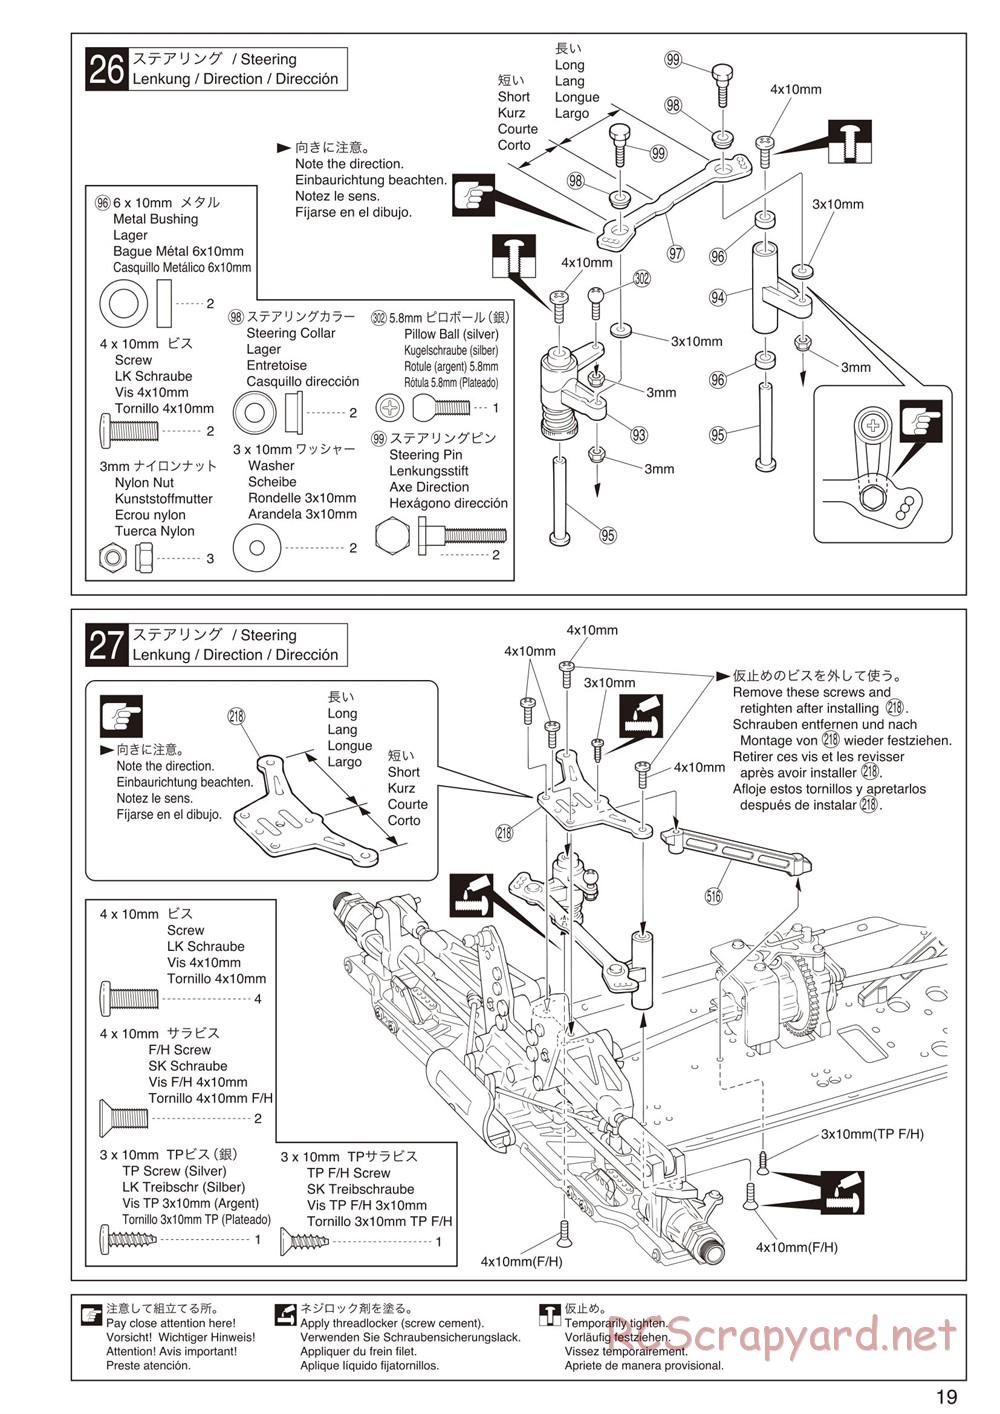 Kyosho - Inferno NEO ST Race Spec - Manual - Page 19